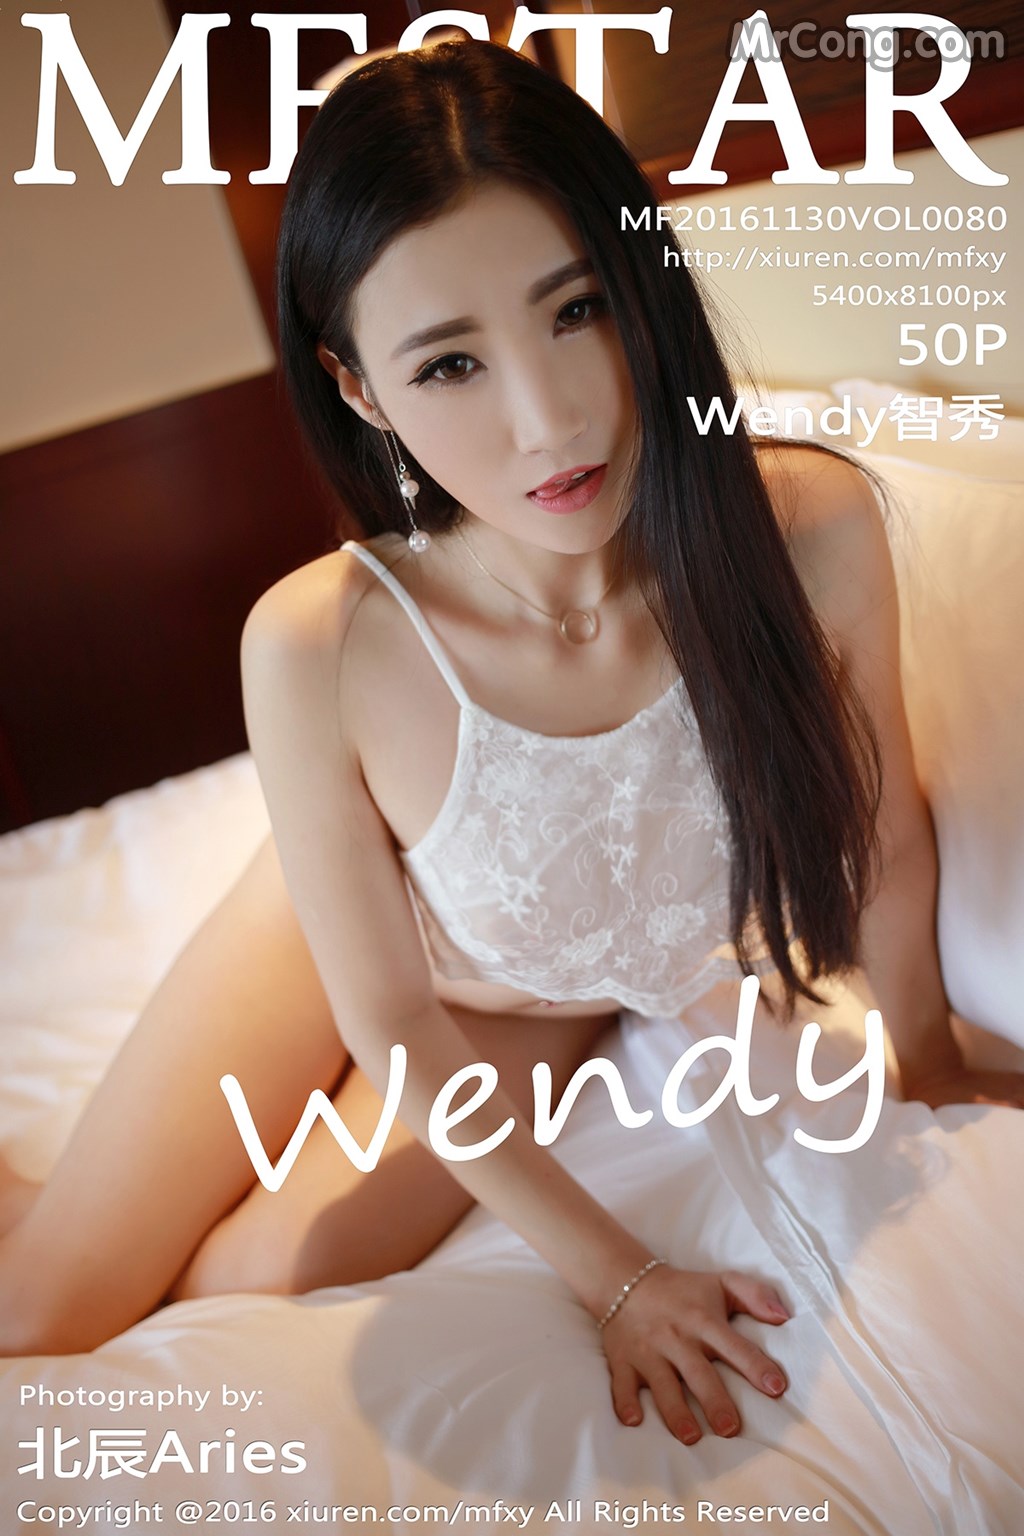 MFStar Vol.080: Model Wendy (智 秀) (51 photos) photo 1-0